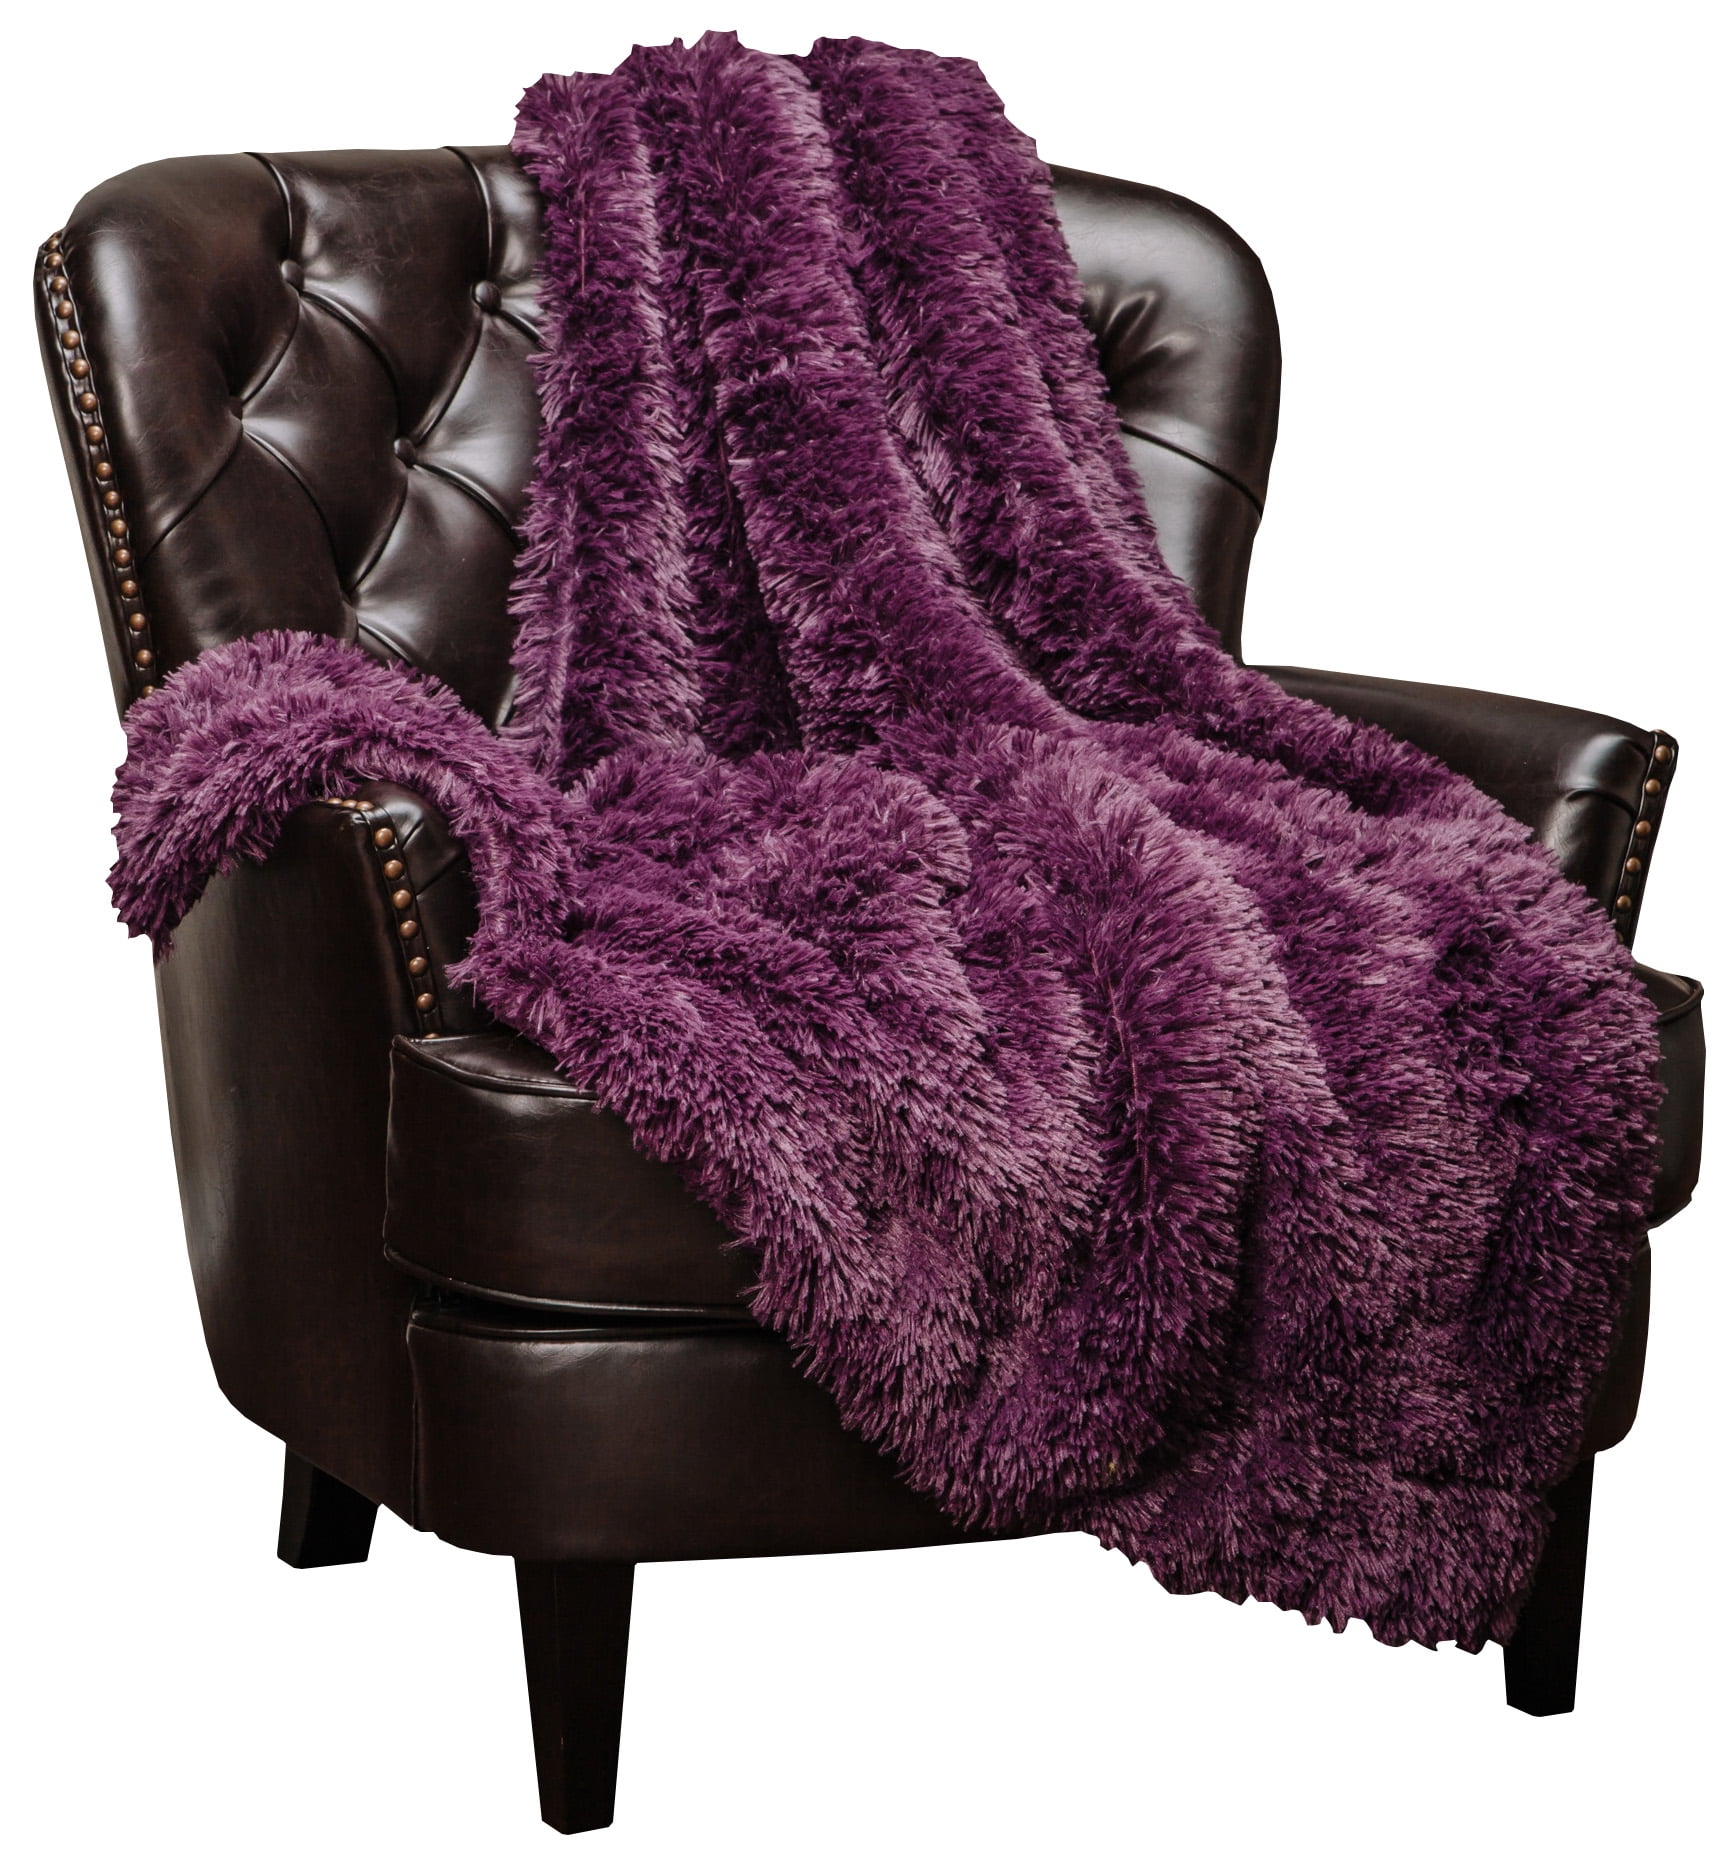 Basics Shaggy Long Fur Faux Fur Sherpa Throw Blanket Cream 50x60